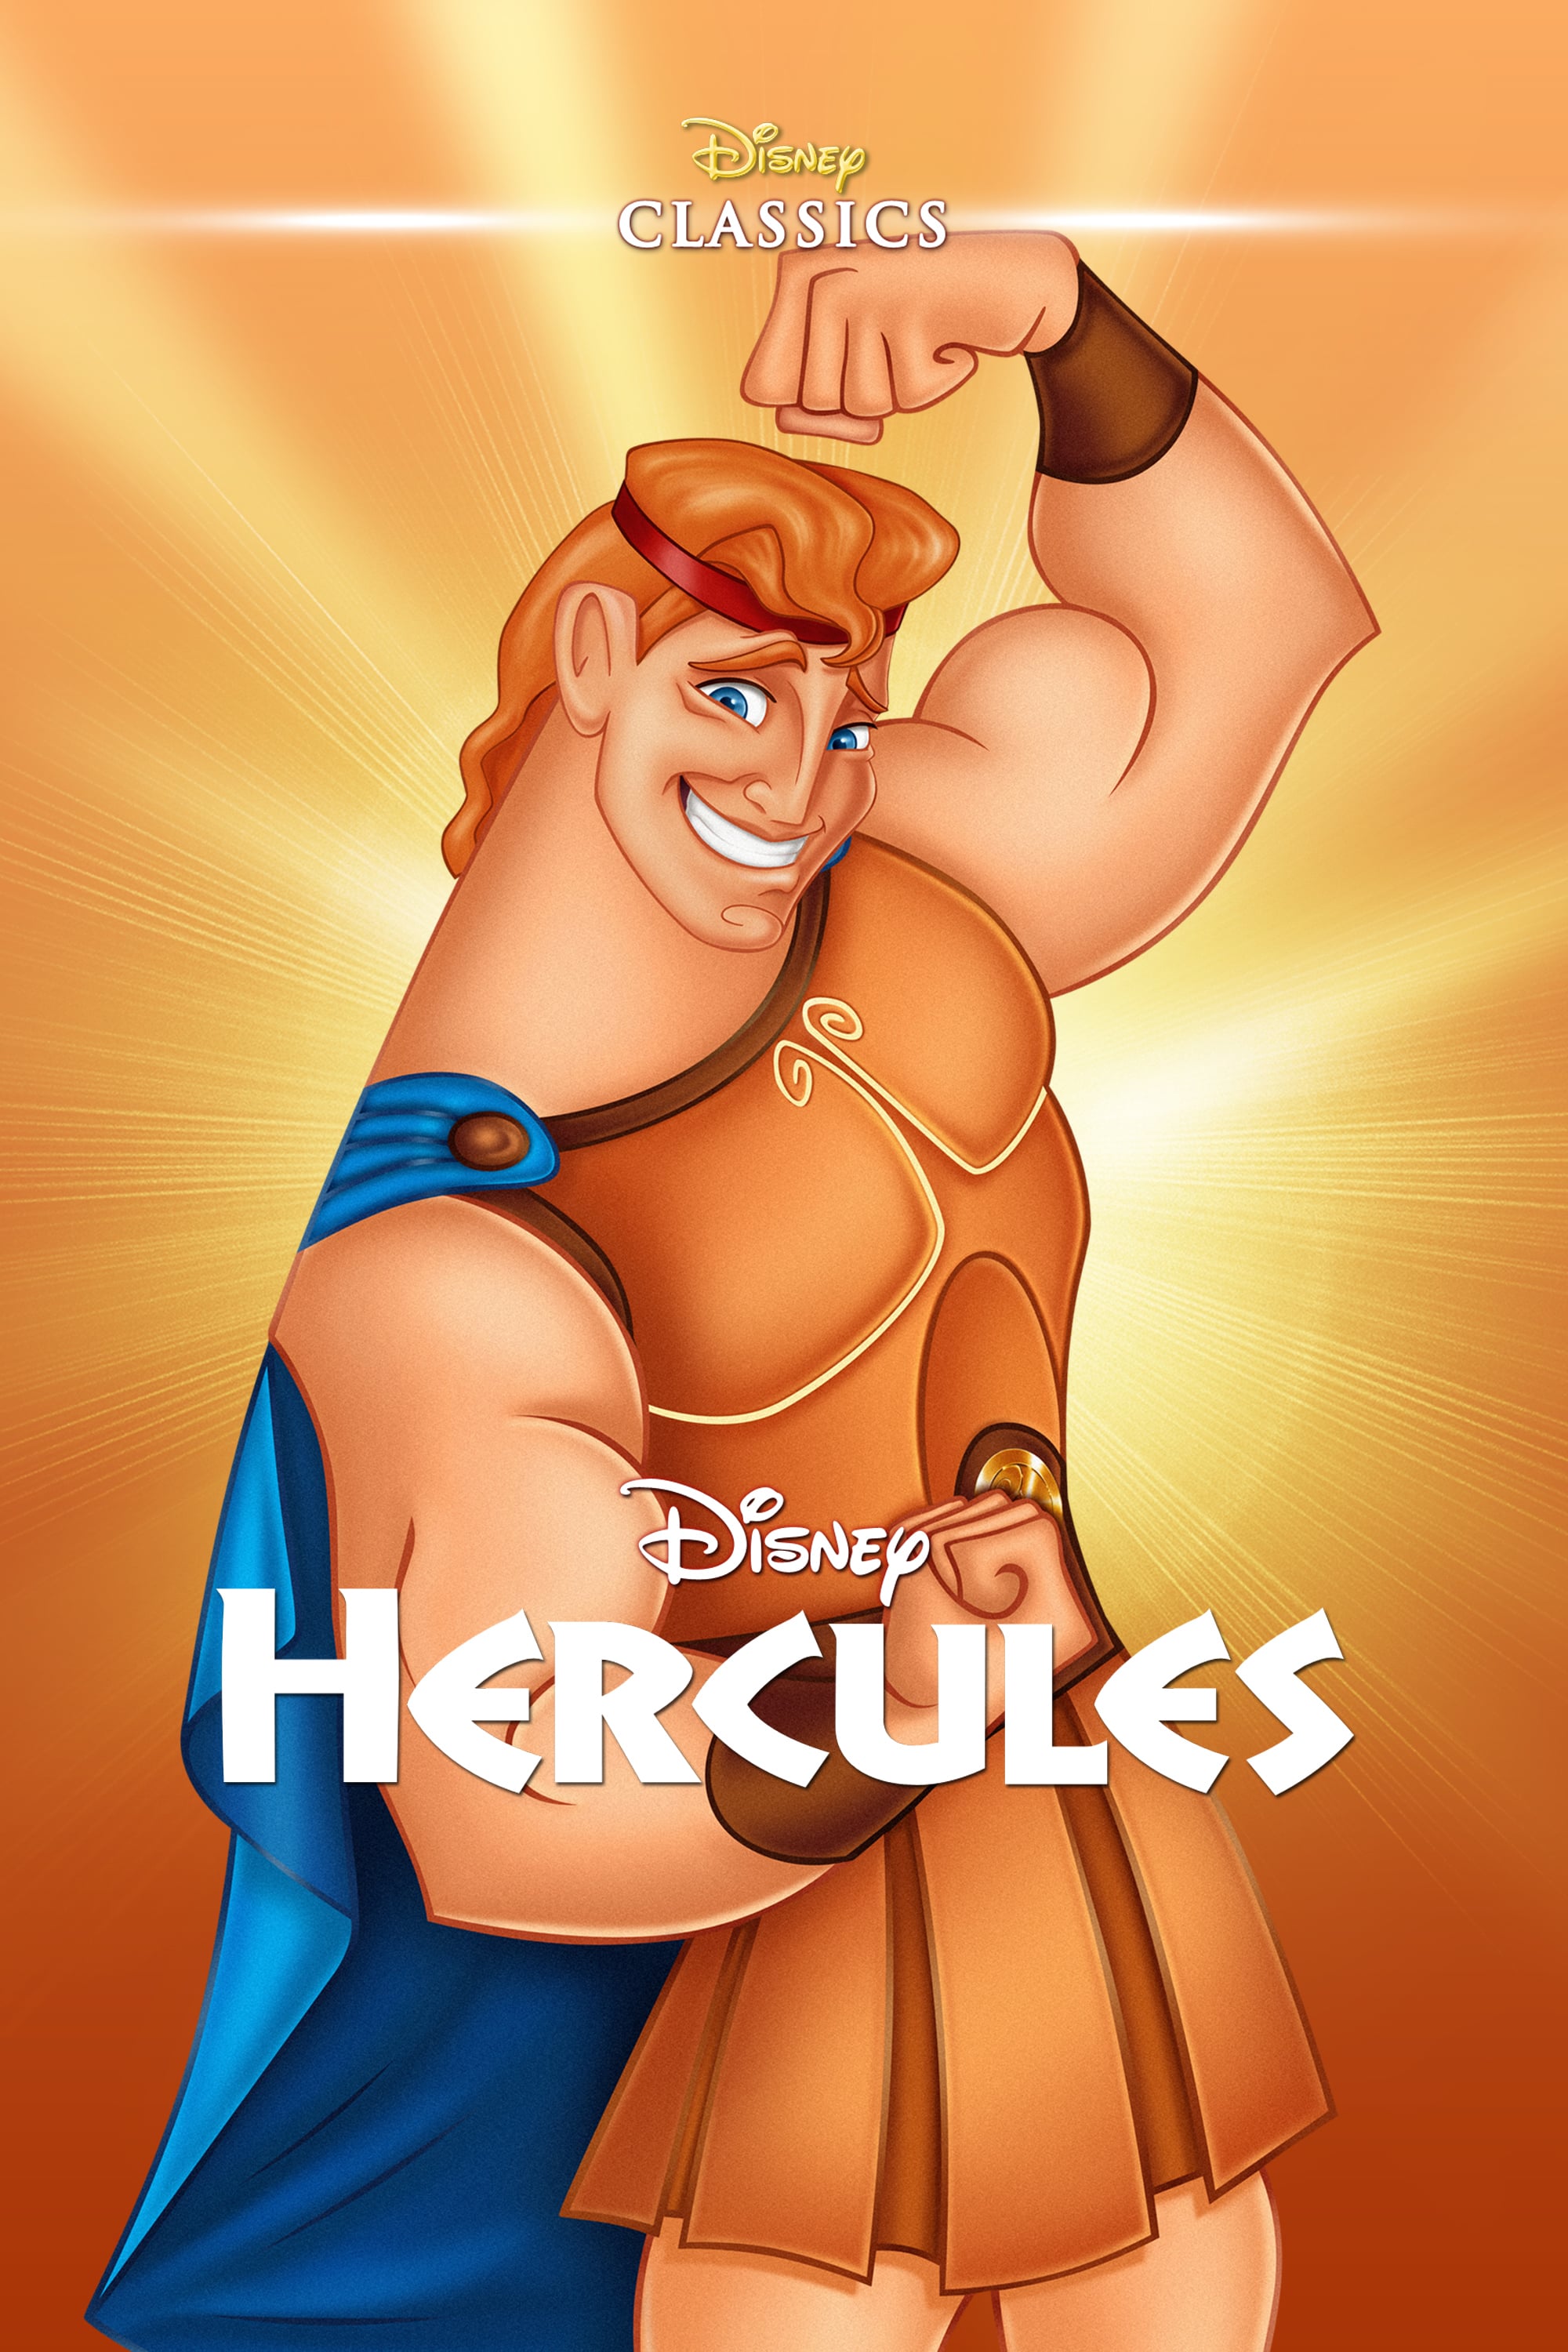 Plakat von "Hercules"